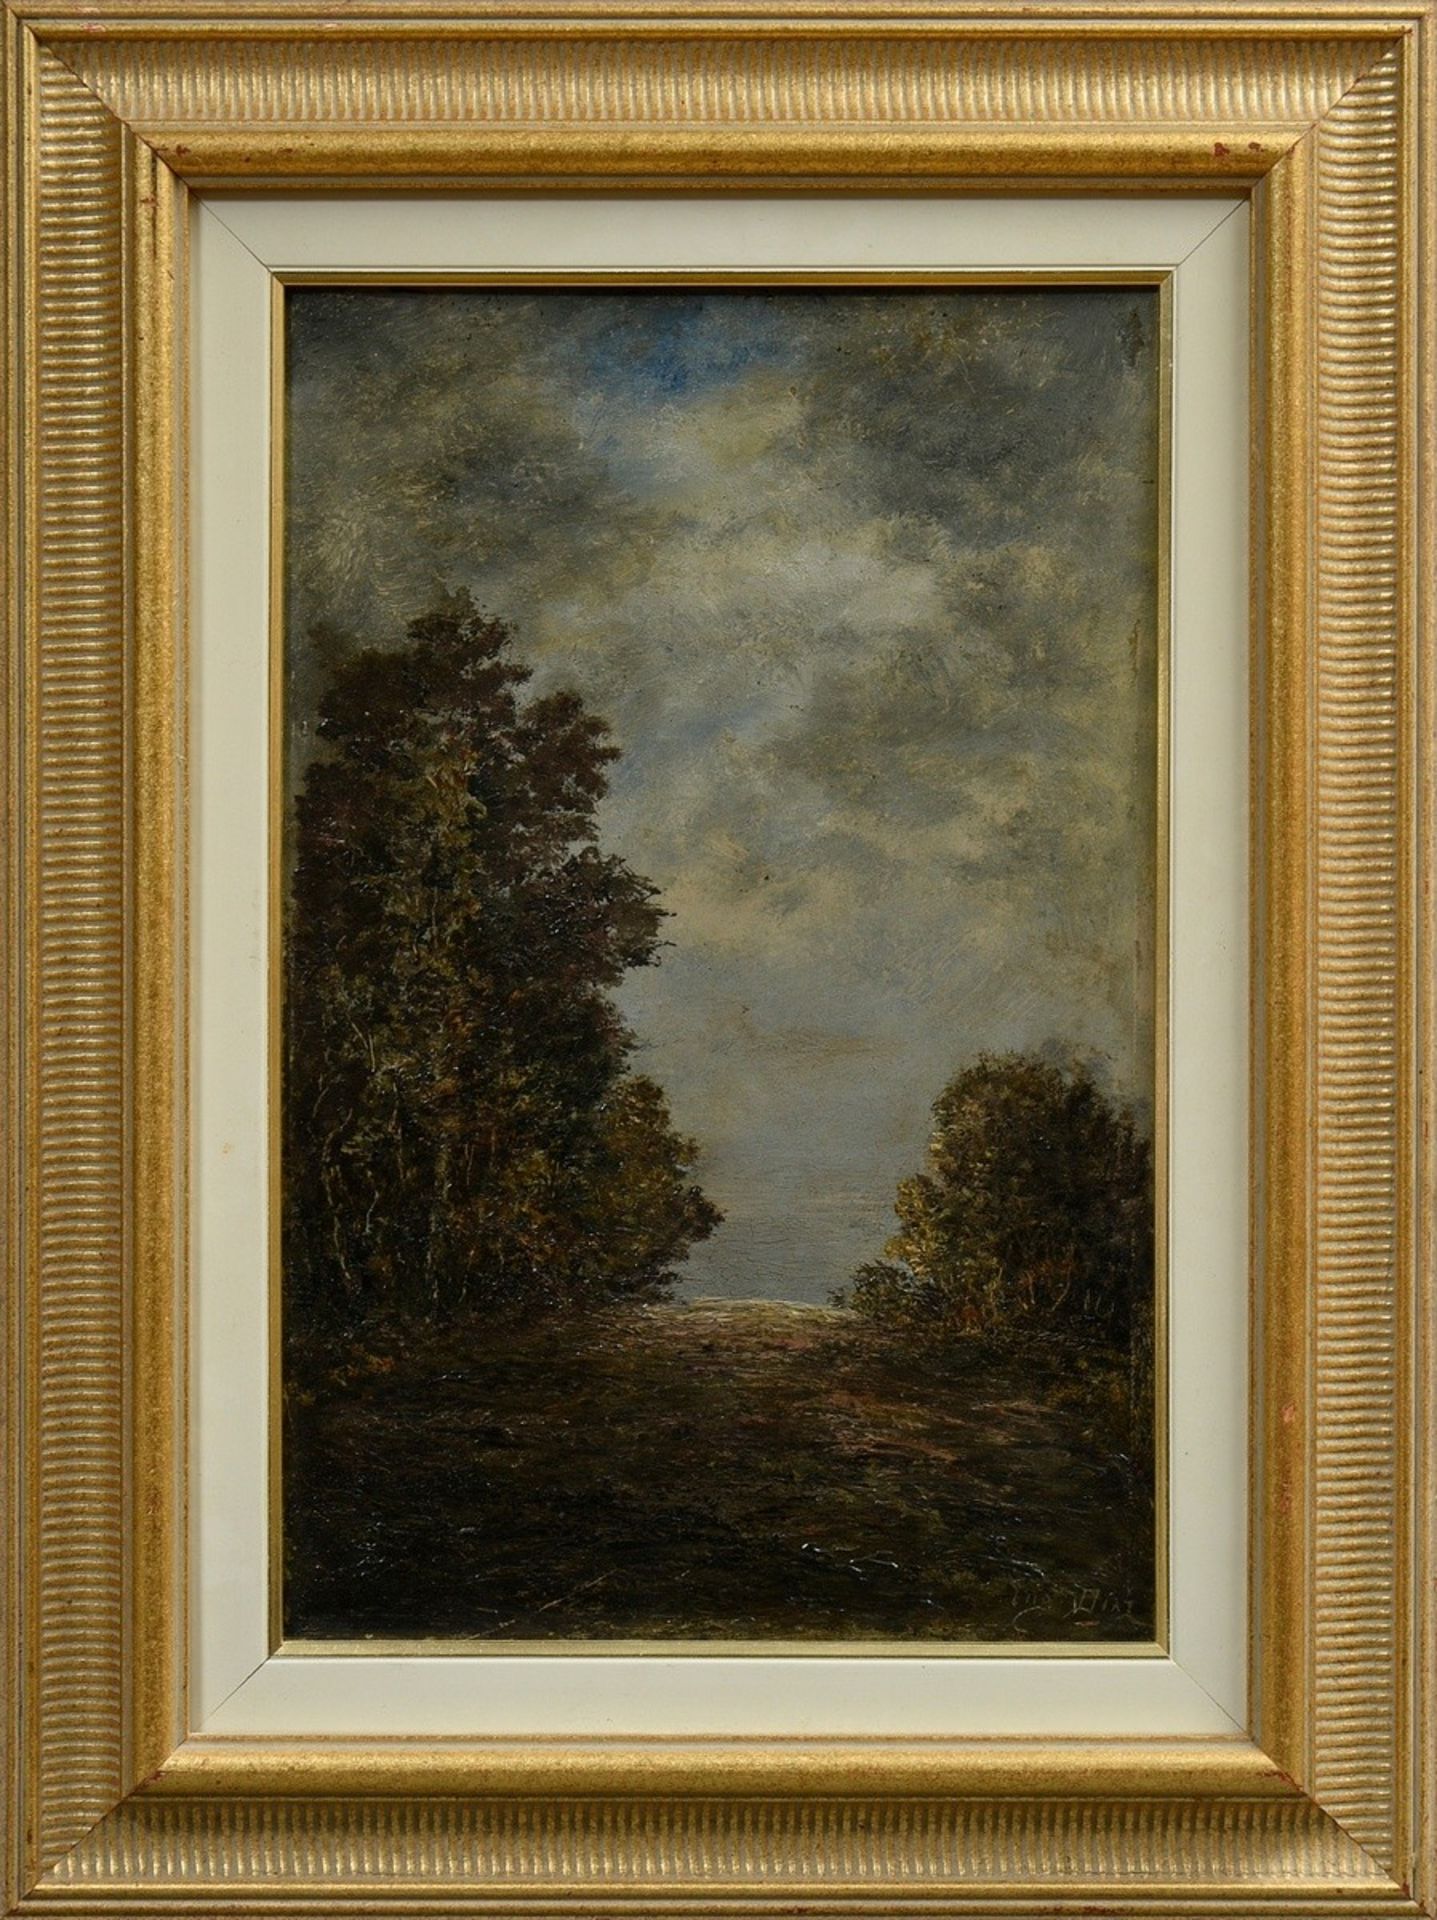 Diaz de la Peña, Eugène (1837-1901) "Landscape" 1880, oil/wood, b.r. sign., verso sign./dat./dedica - Image 2 of 6